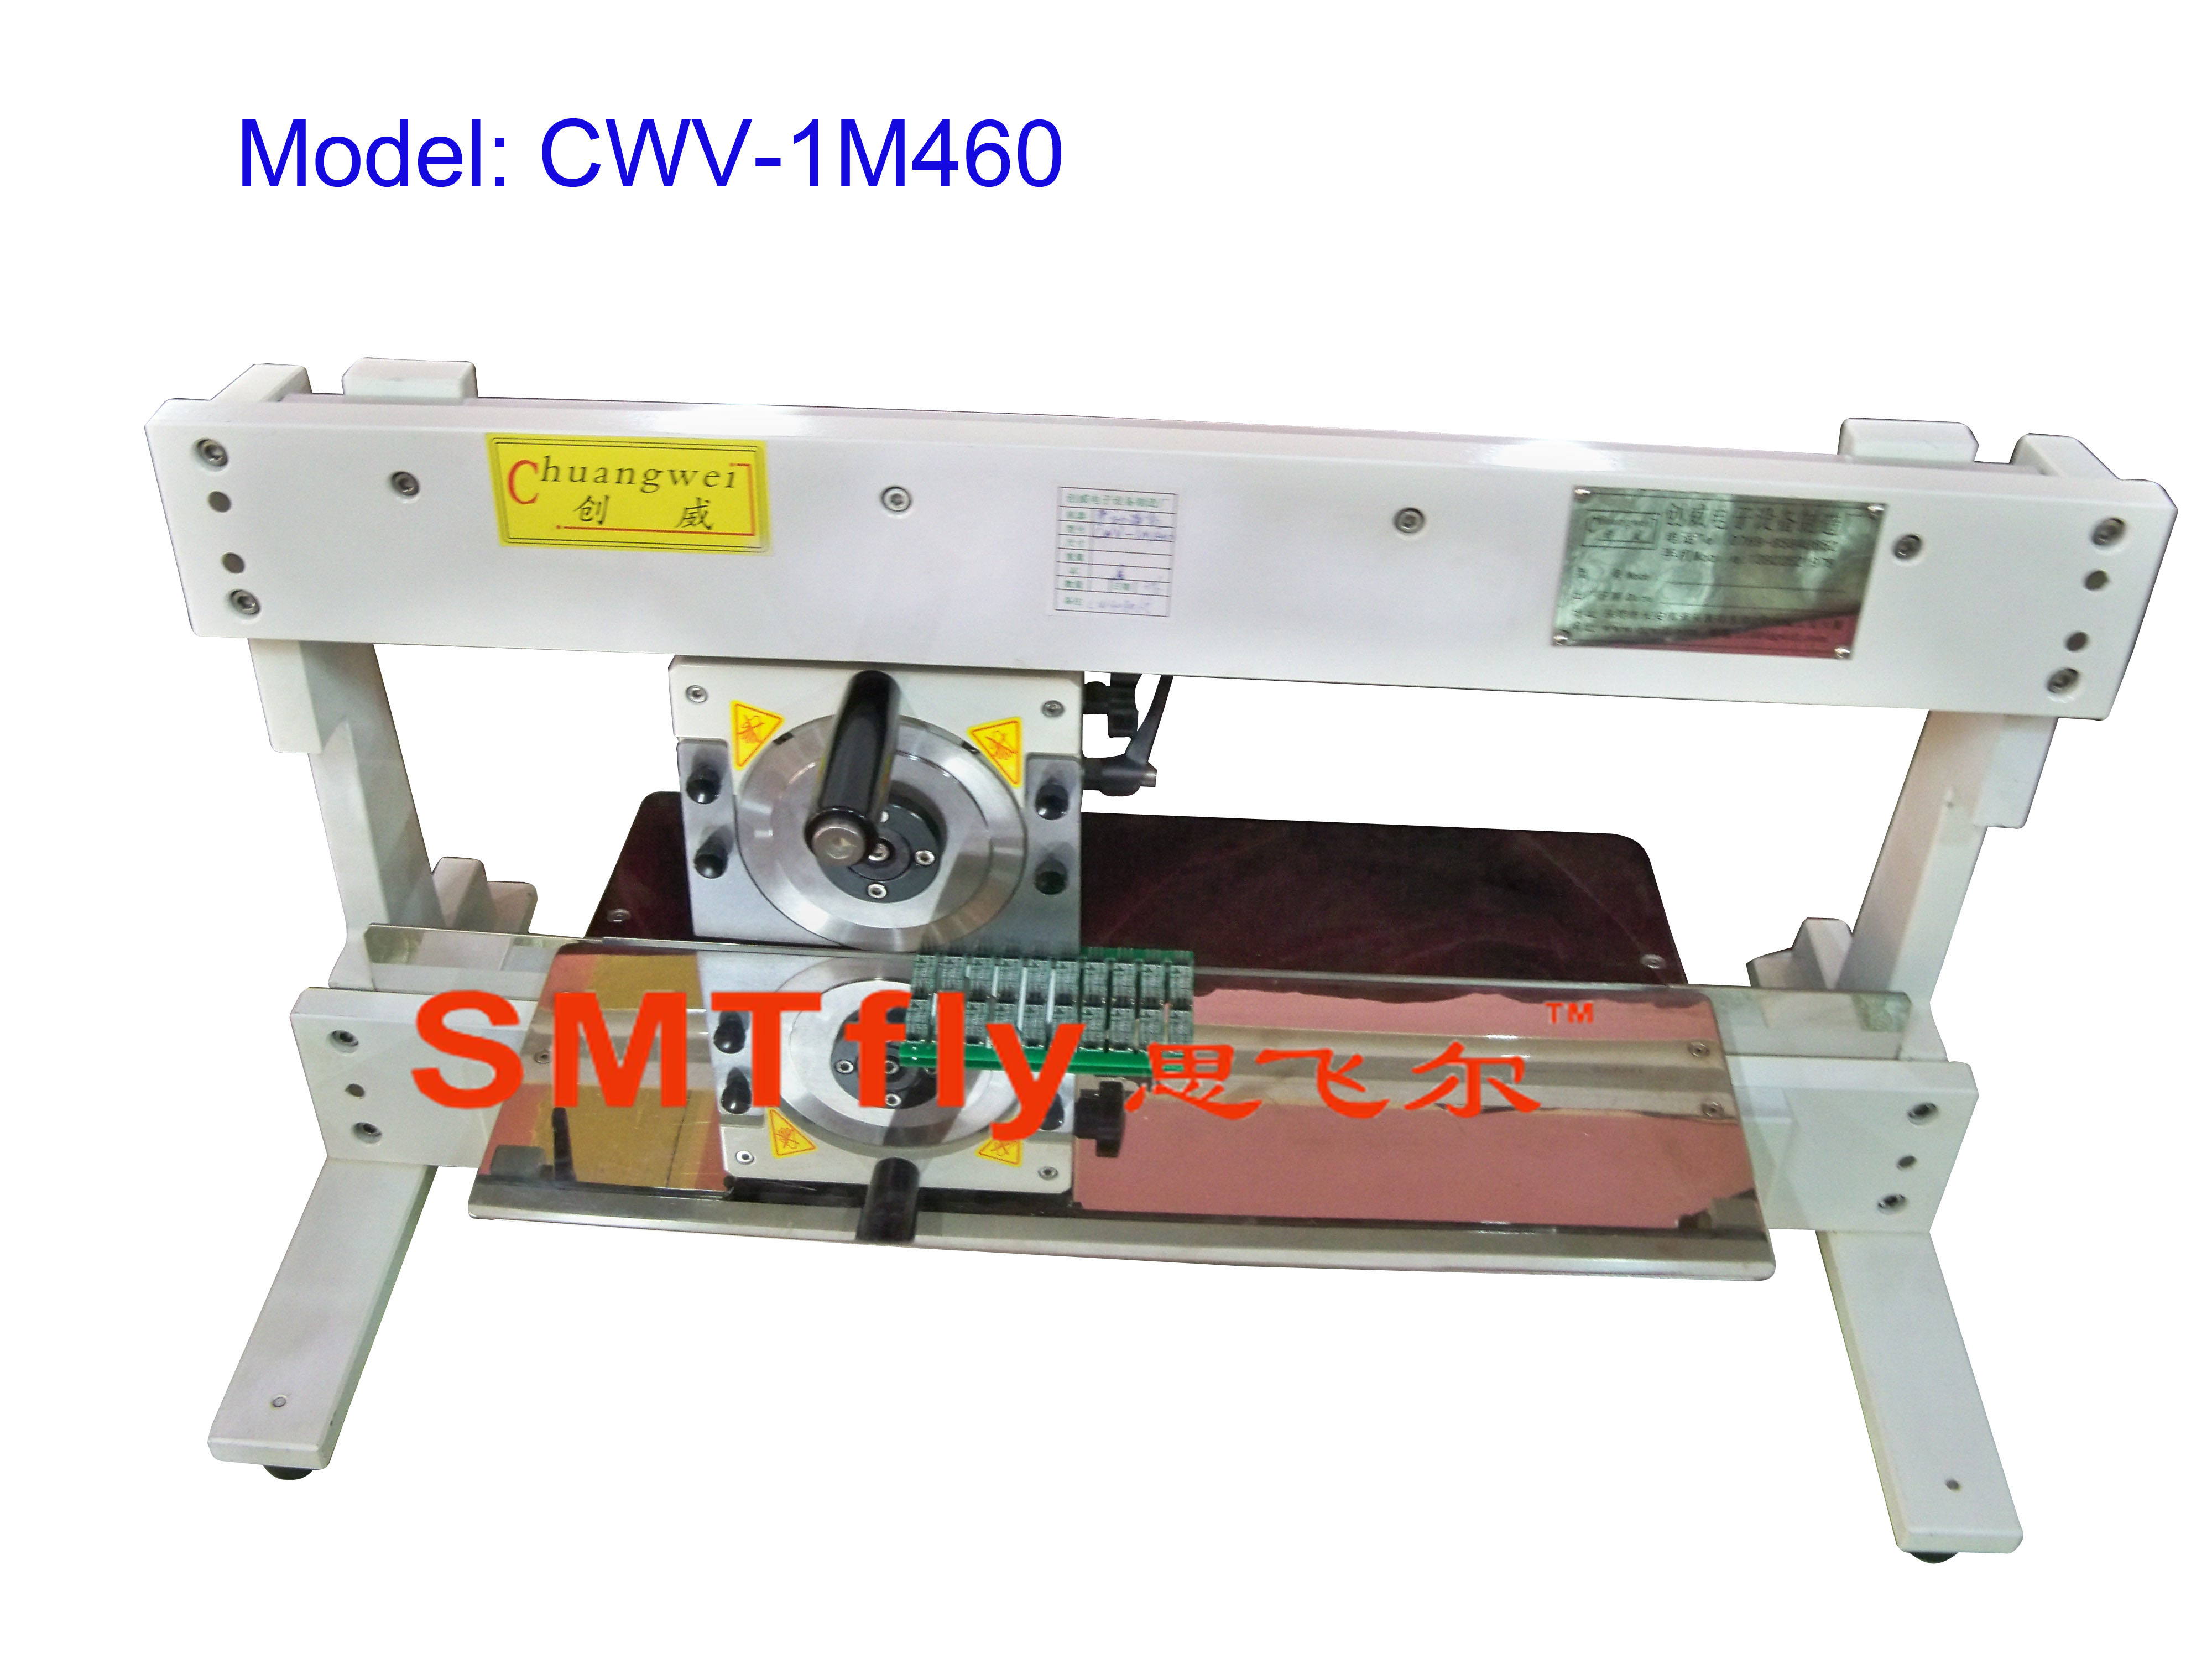 Circular Blade Moving PCB Separator Machine,SMTfly-1M